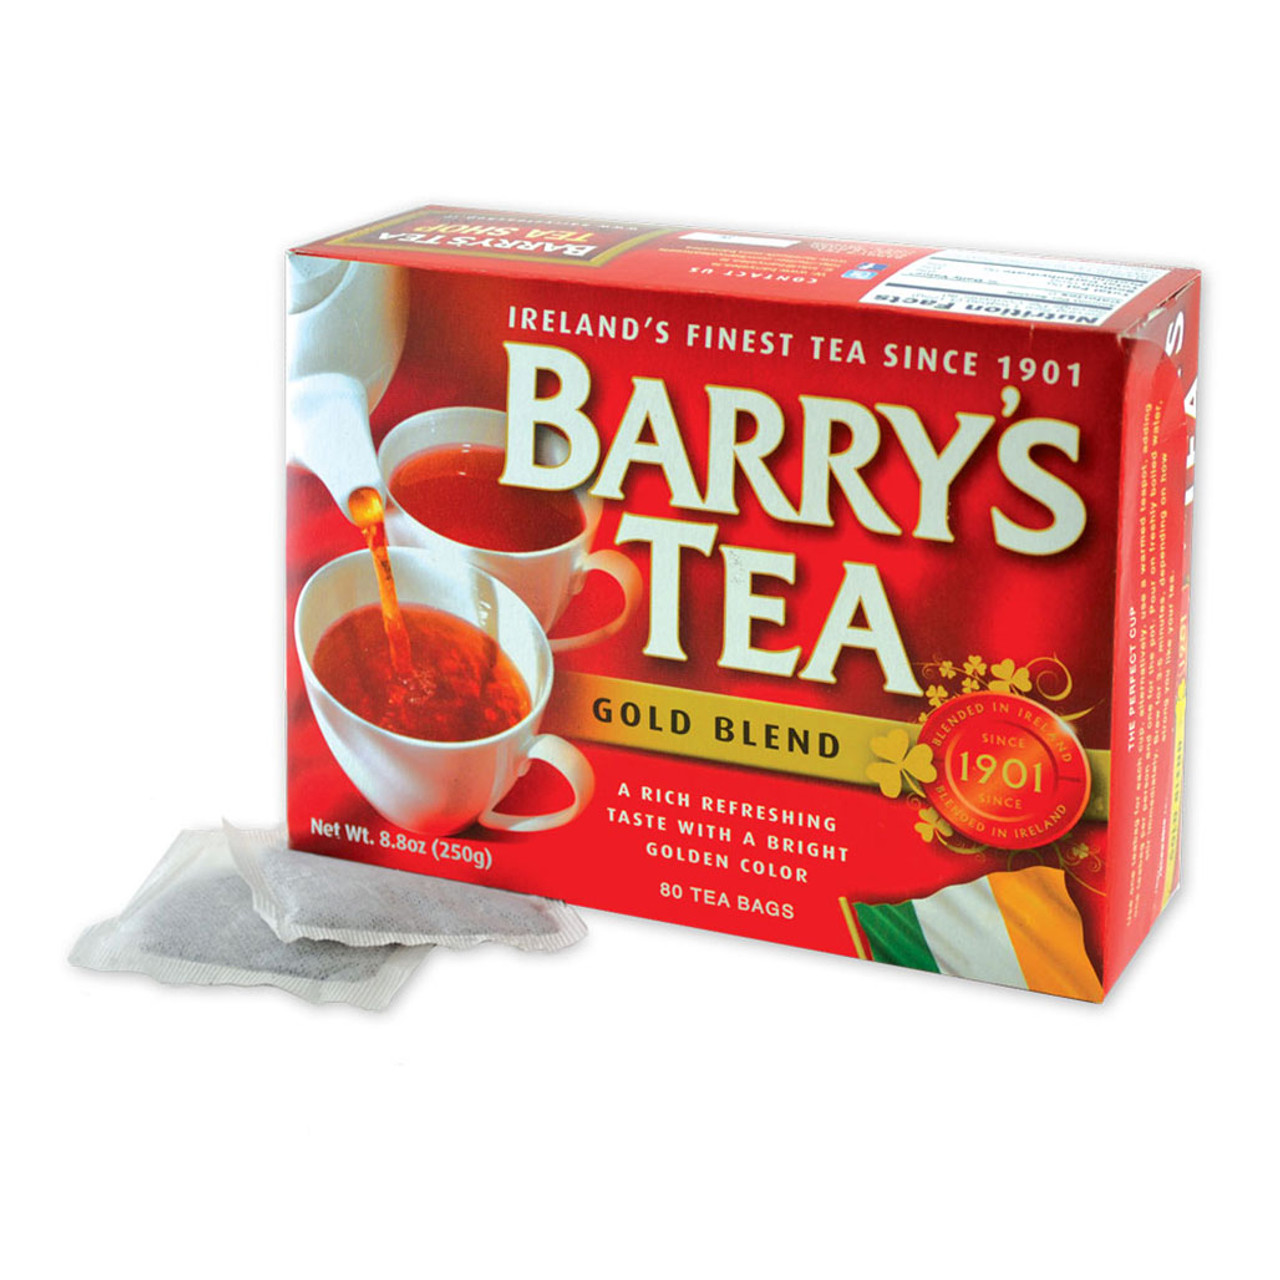 Barry's Gold Blend Tea - 80 Count